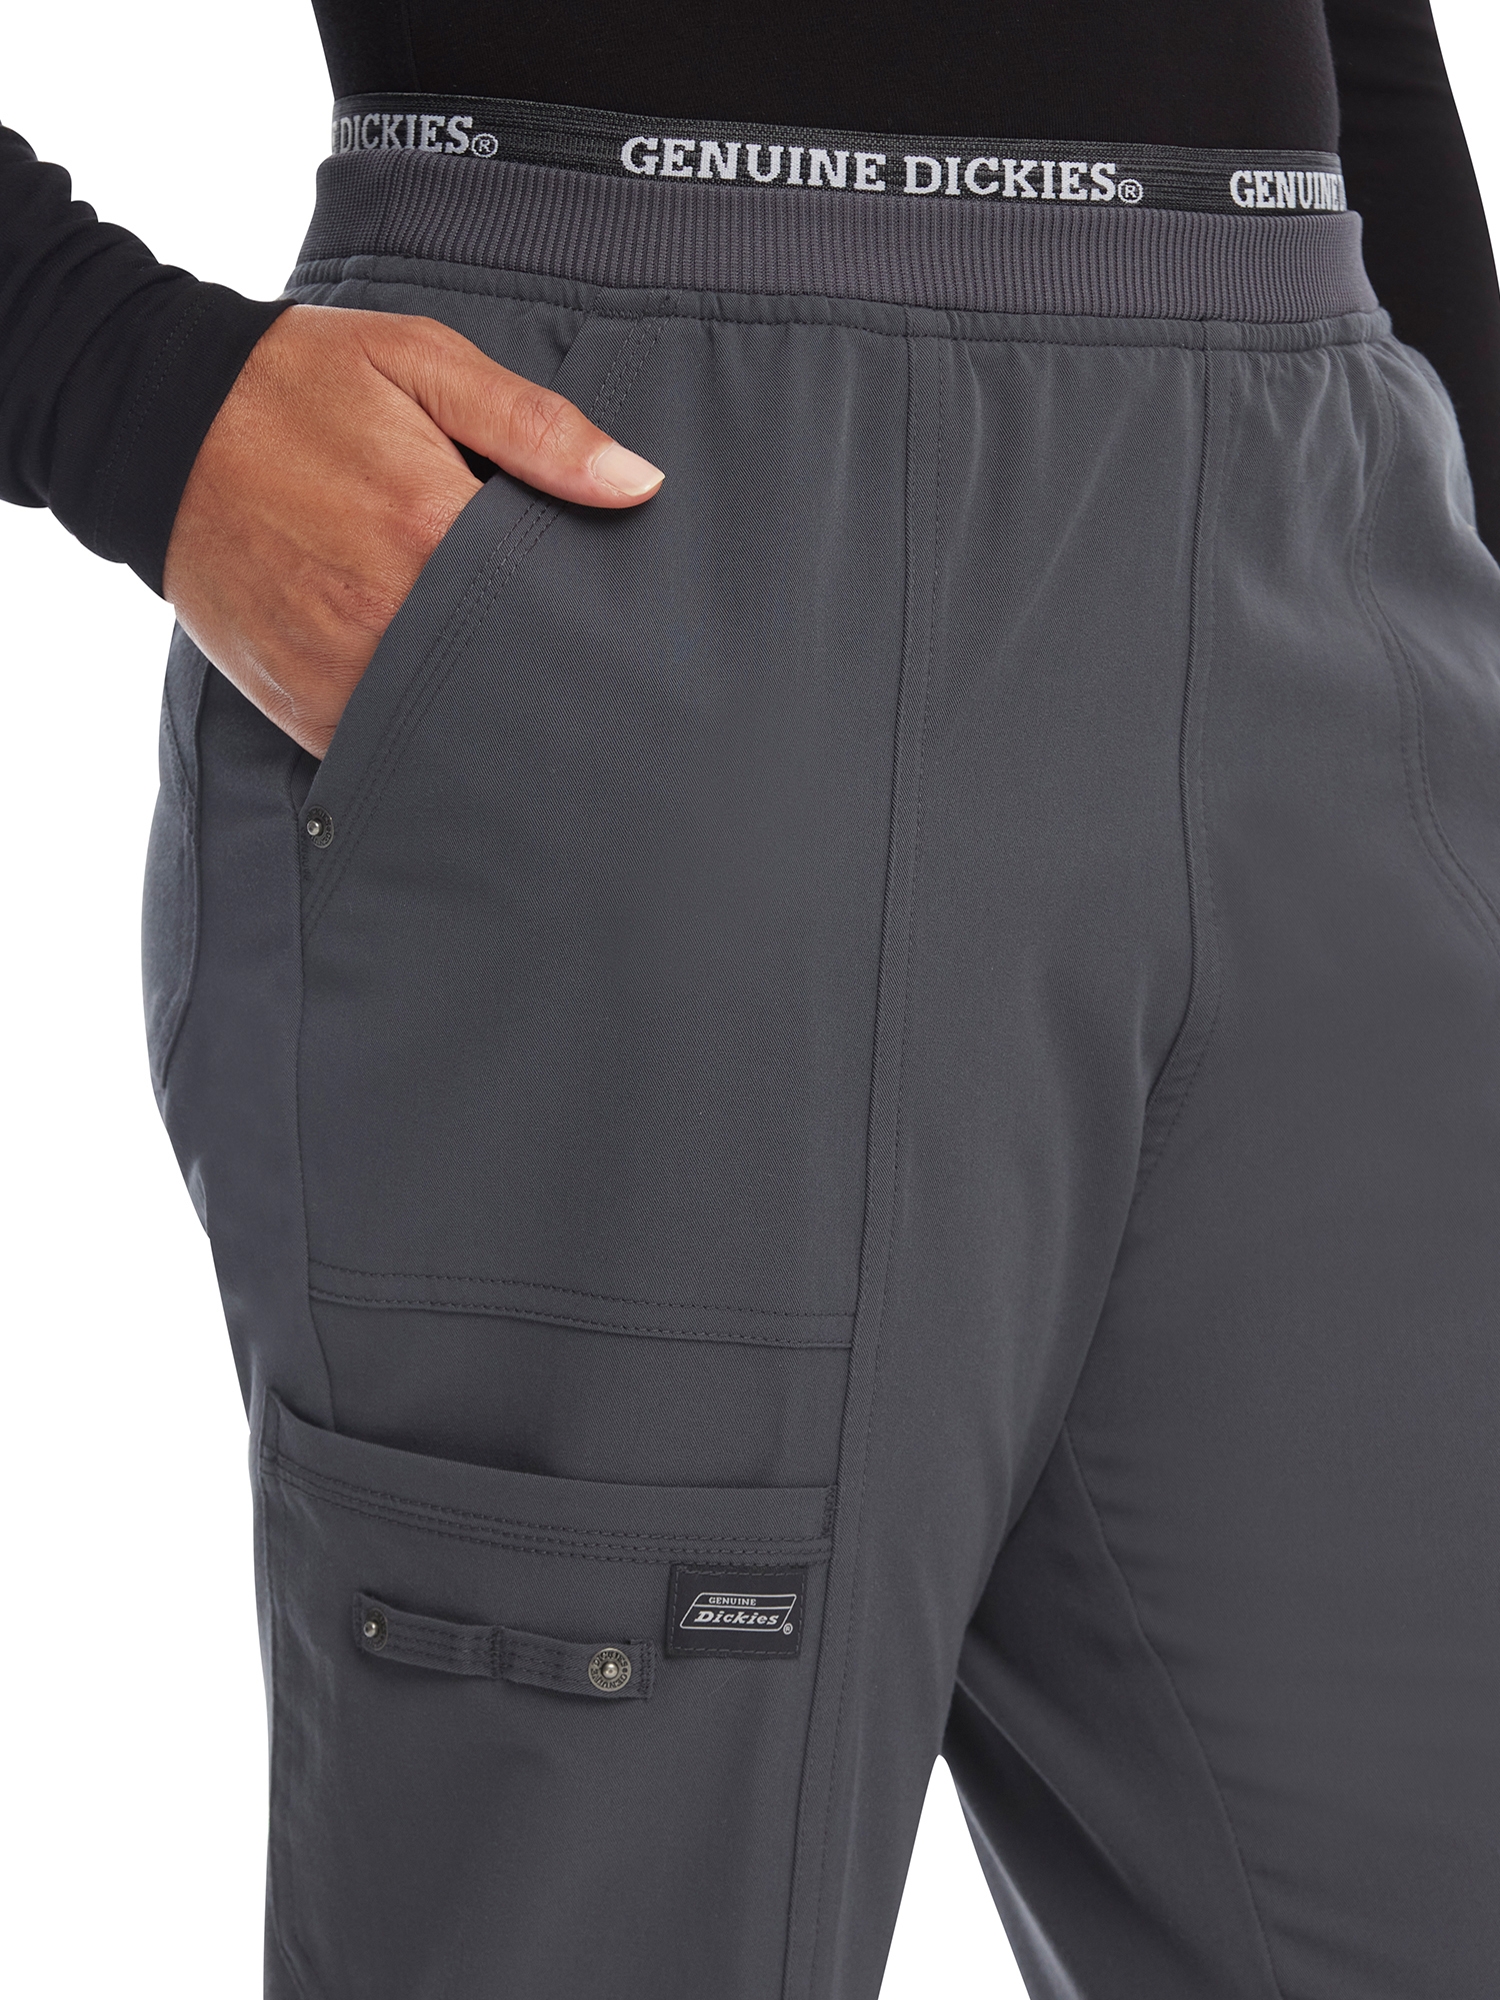 Mejores ofertas e historial de precios de Athletic Works Women's Fleece  Pants with Pockets, Sizes XS-3XL en